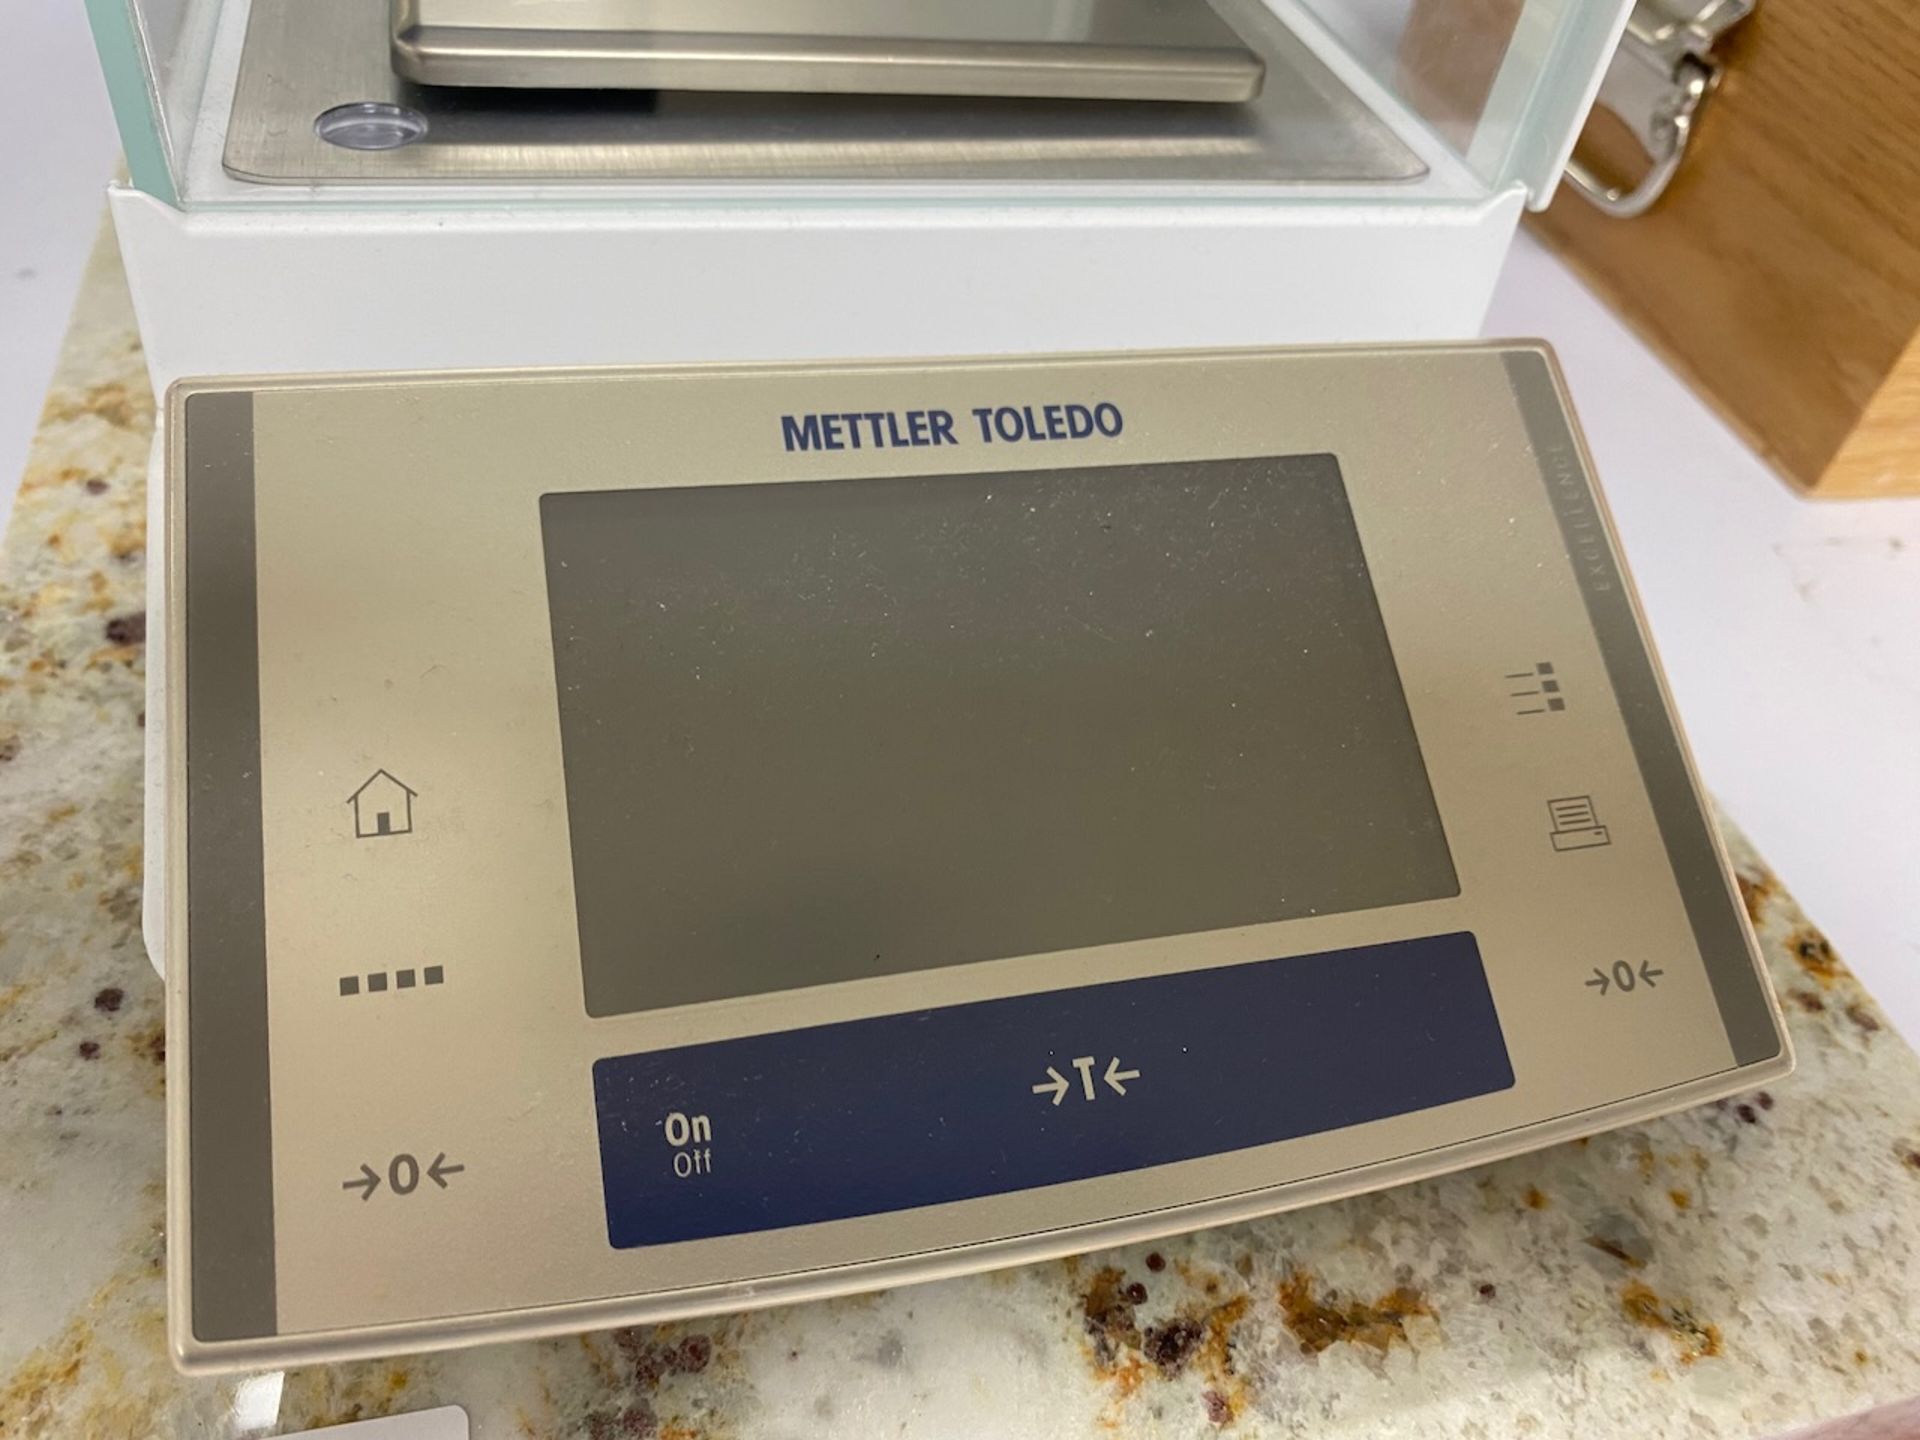 Mettler Toledo lab scale - Image 2 of 3